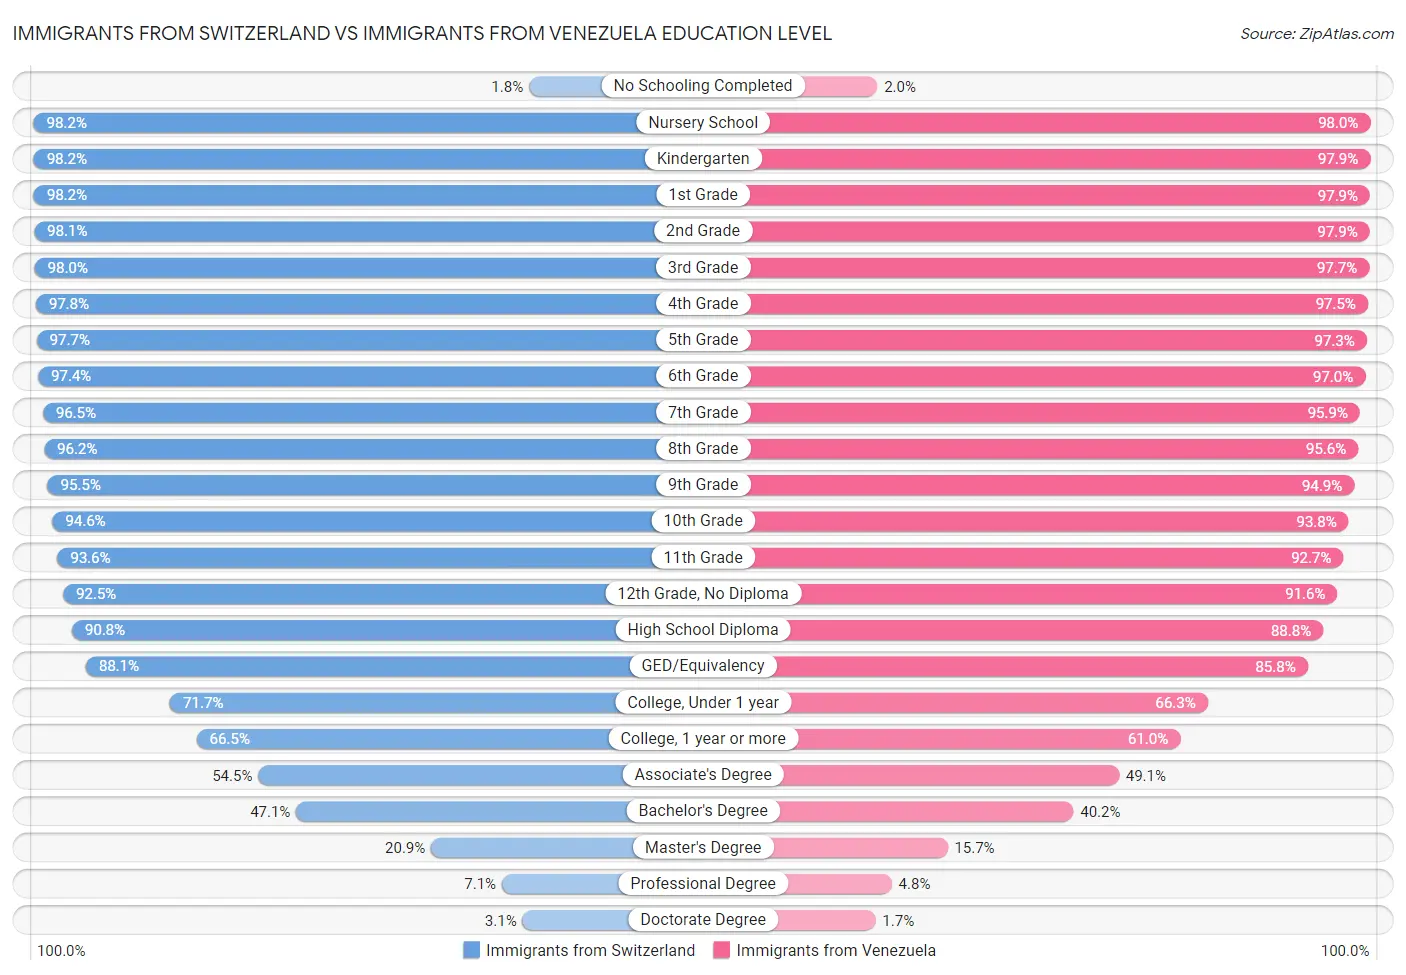 Immigrants from Switzerland vs Immigrants from Venezuela Education Level